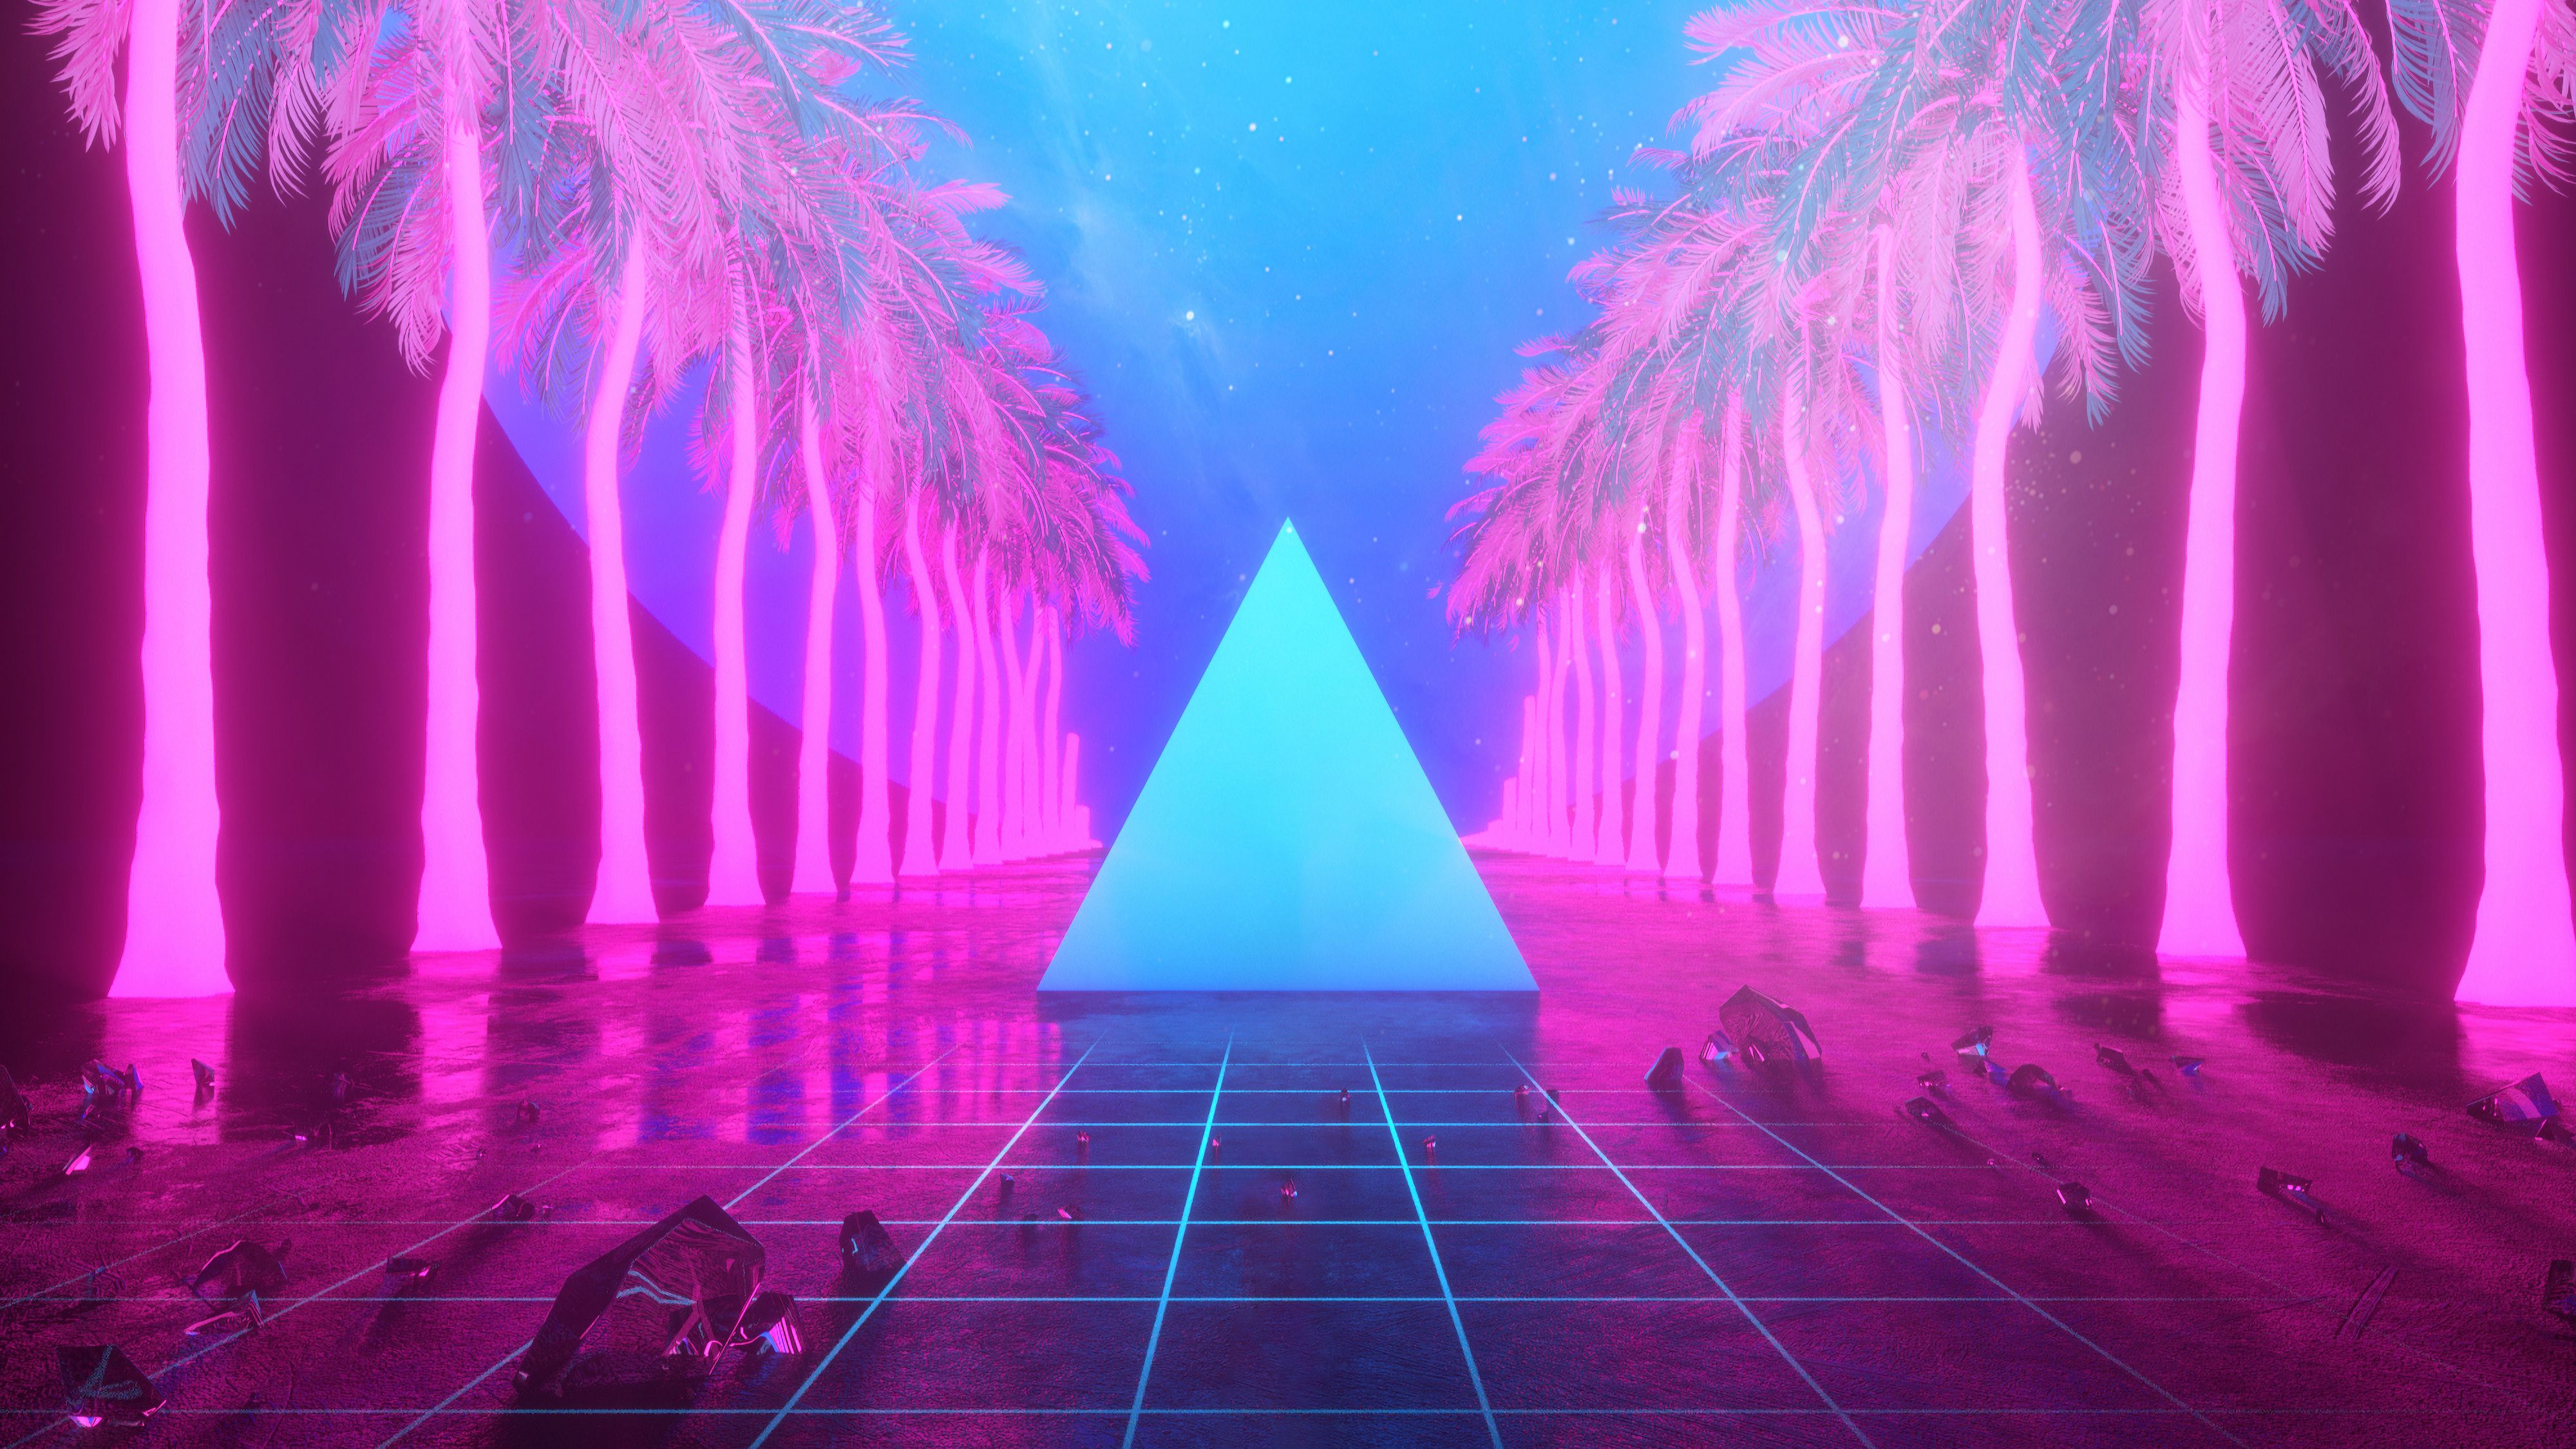 Miami Trees Triangle Neon Artwork 4k, HD Artist, 4k Wallpapers